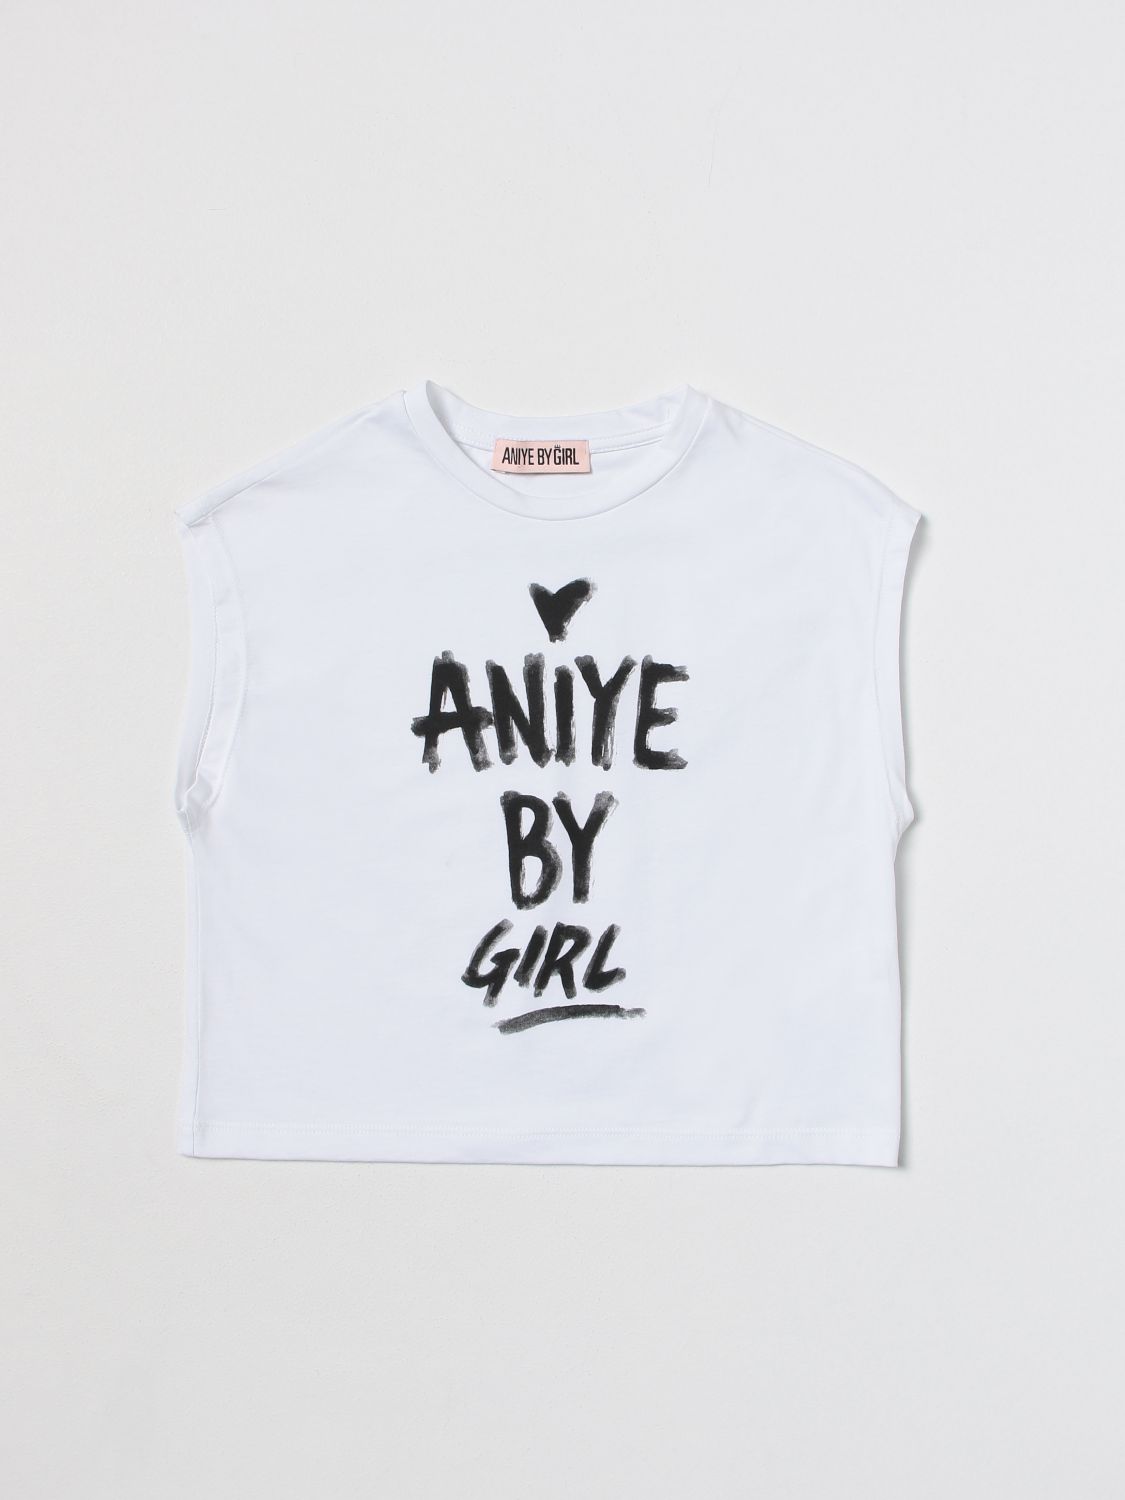 ANIYE BY: t-shirt for girls - White | Aniye By t-shirt 033378 online on ...